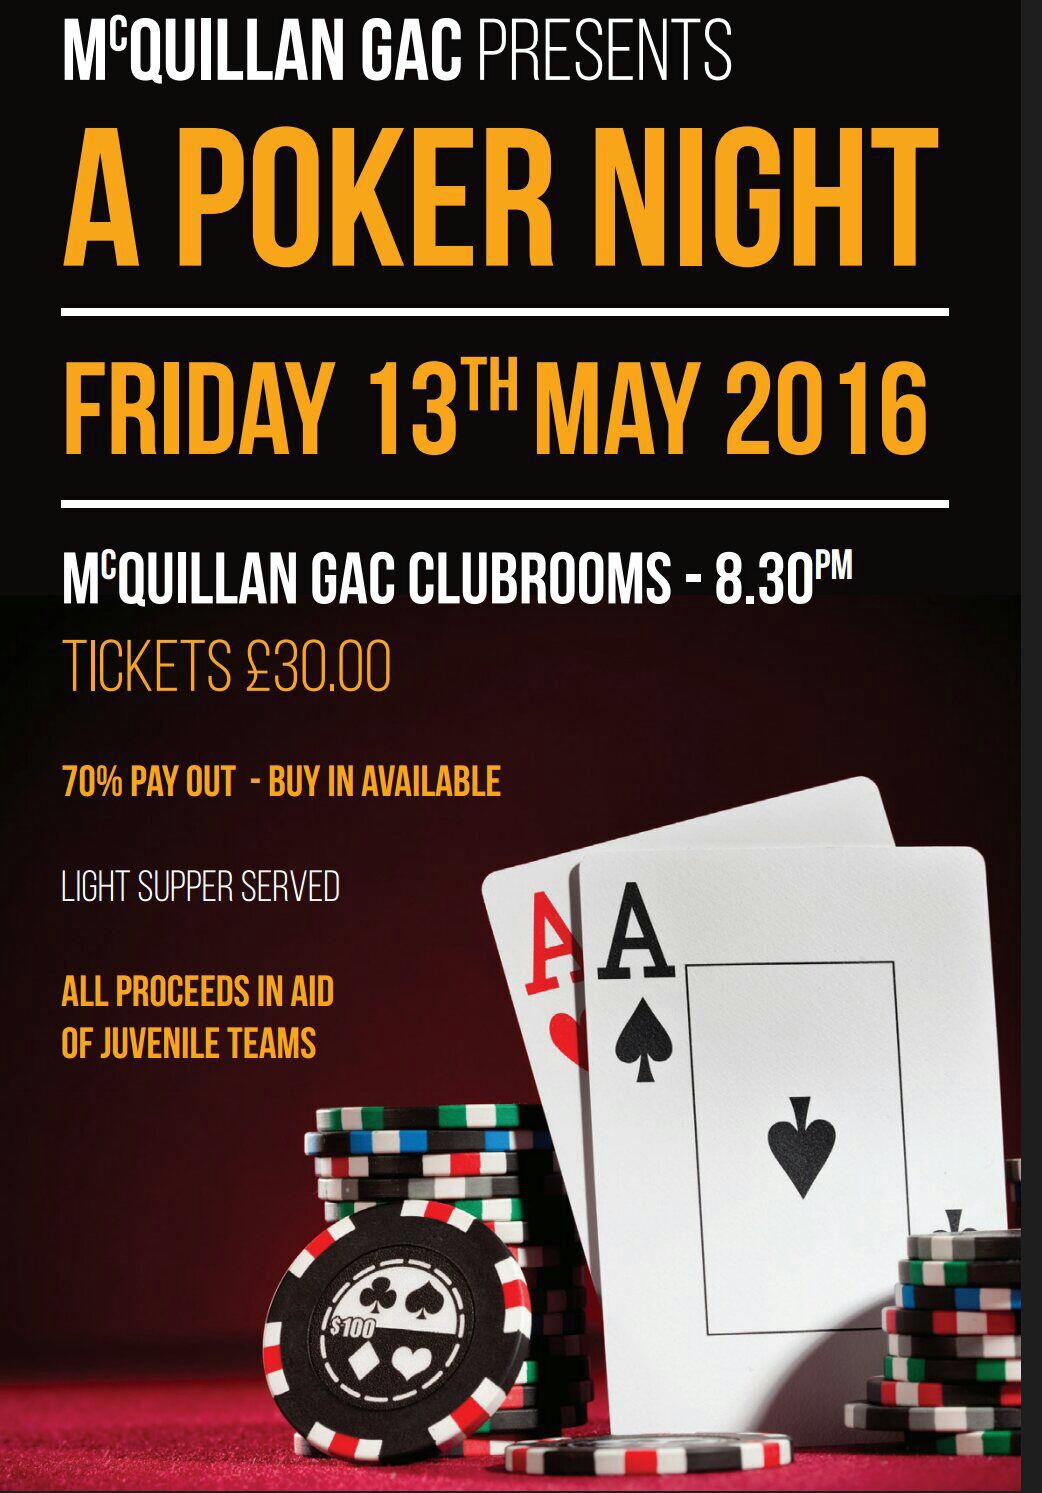 McQuillan GAC Poker Night in aid of Juvenile teams – Friday 13 May 2016